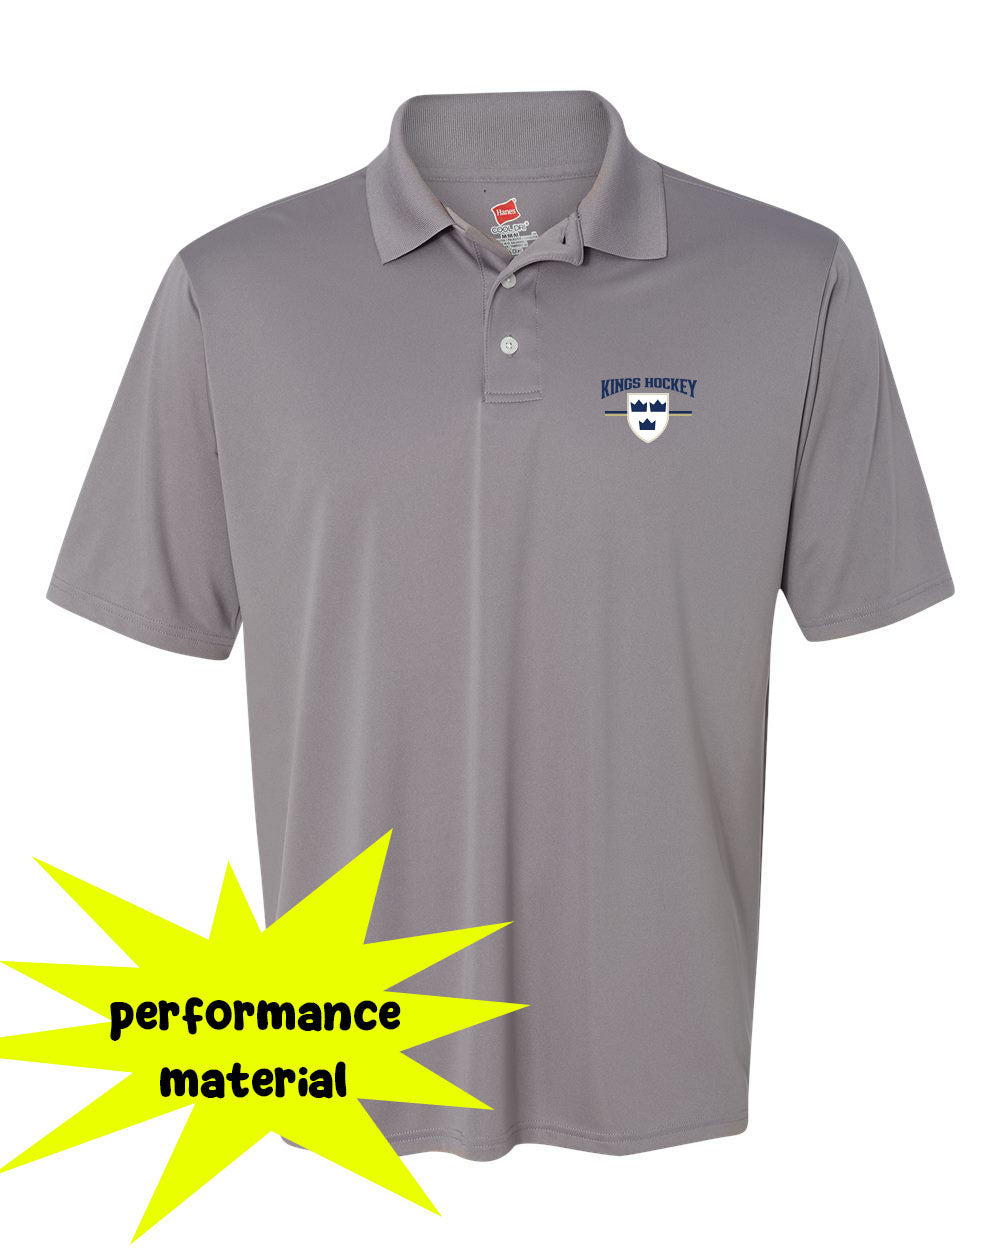 Kings Hockey Design 5 Performance Material Polo T-Shirt